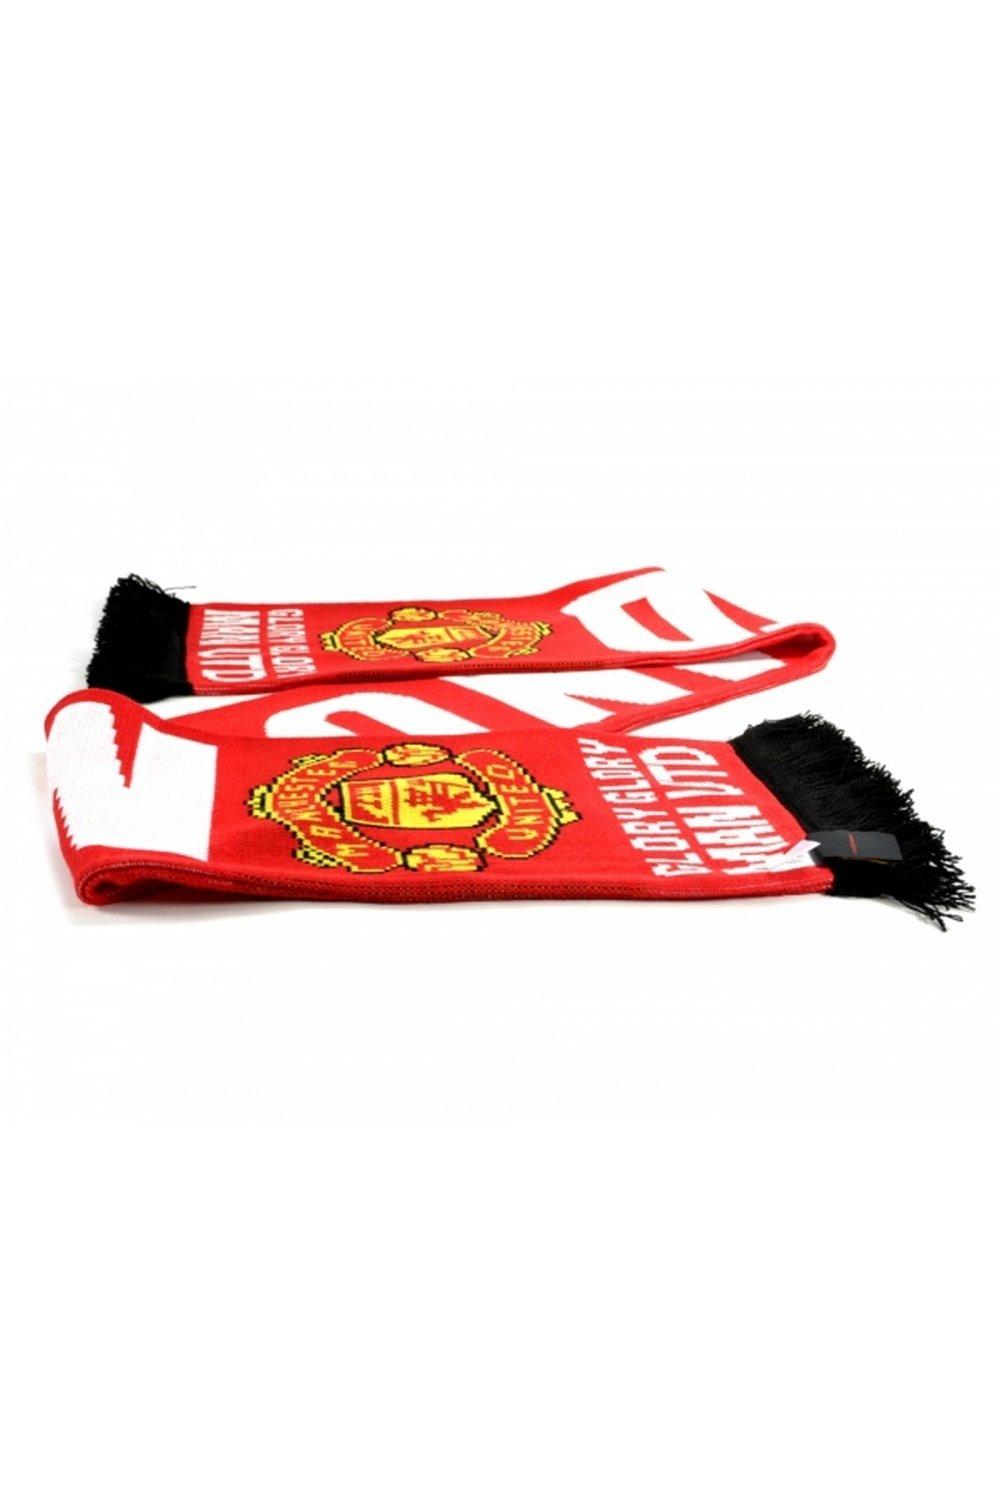 Официальный шарф Football Glory Glory Manchester United FC, мультиколор жаккардовый шарф h